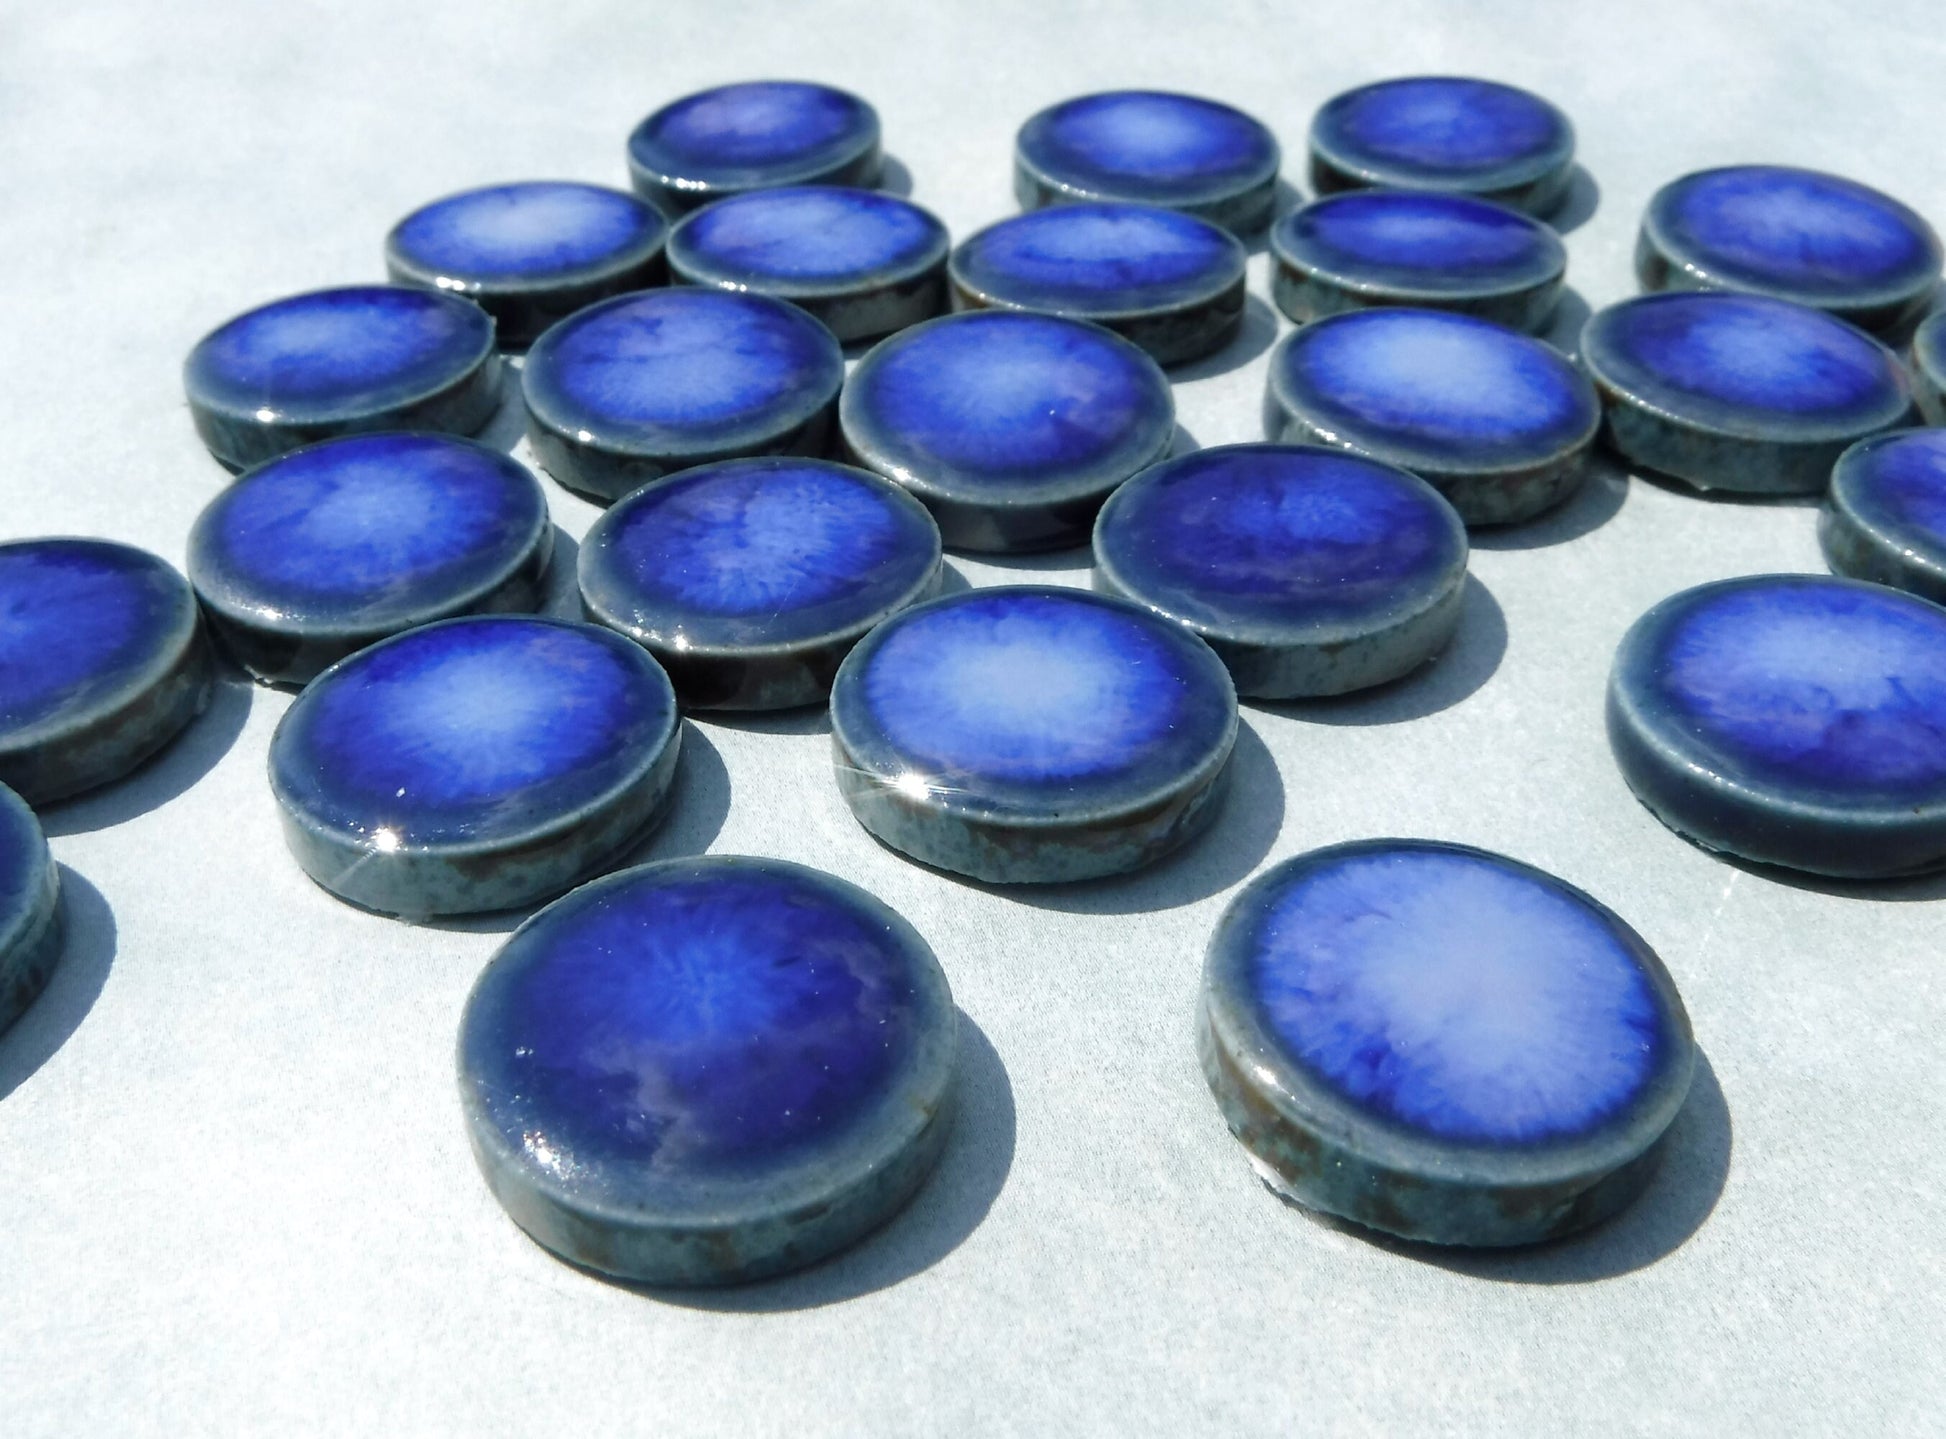 Stone Washed Blue Ceramic Tiles - 2 cm Penny Rounds Mosaic Tiles - 25 Tiles - Porcelain Circles